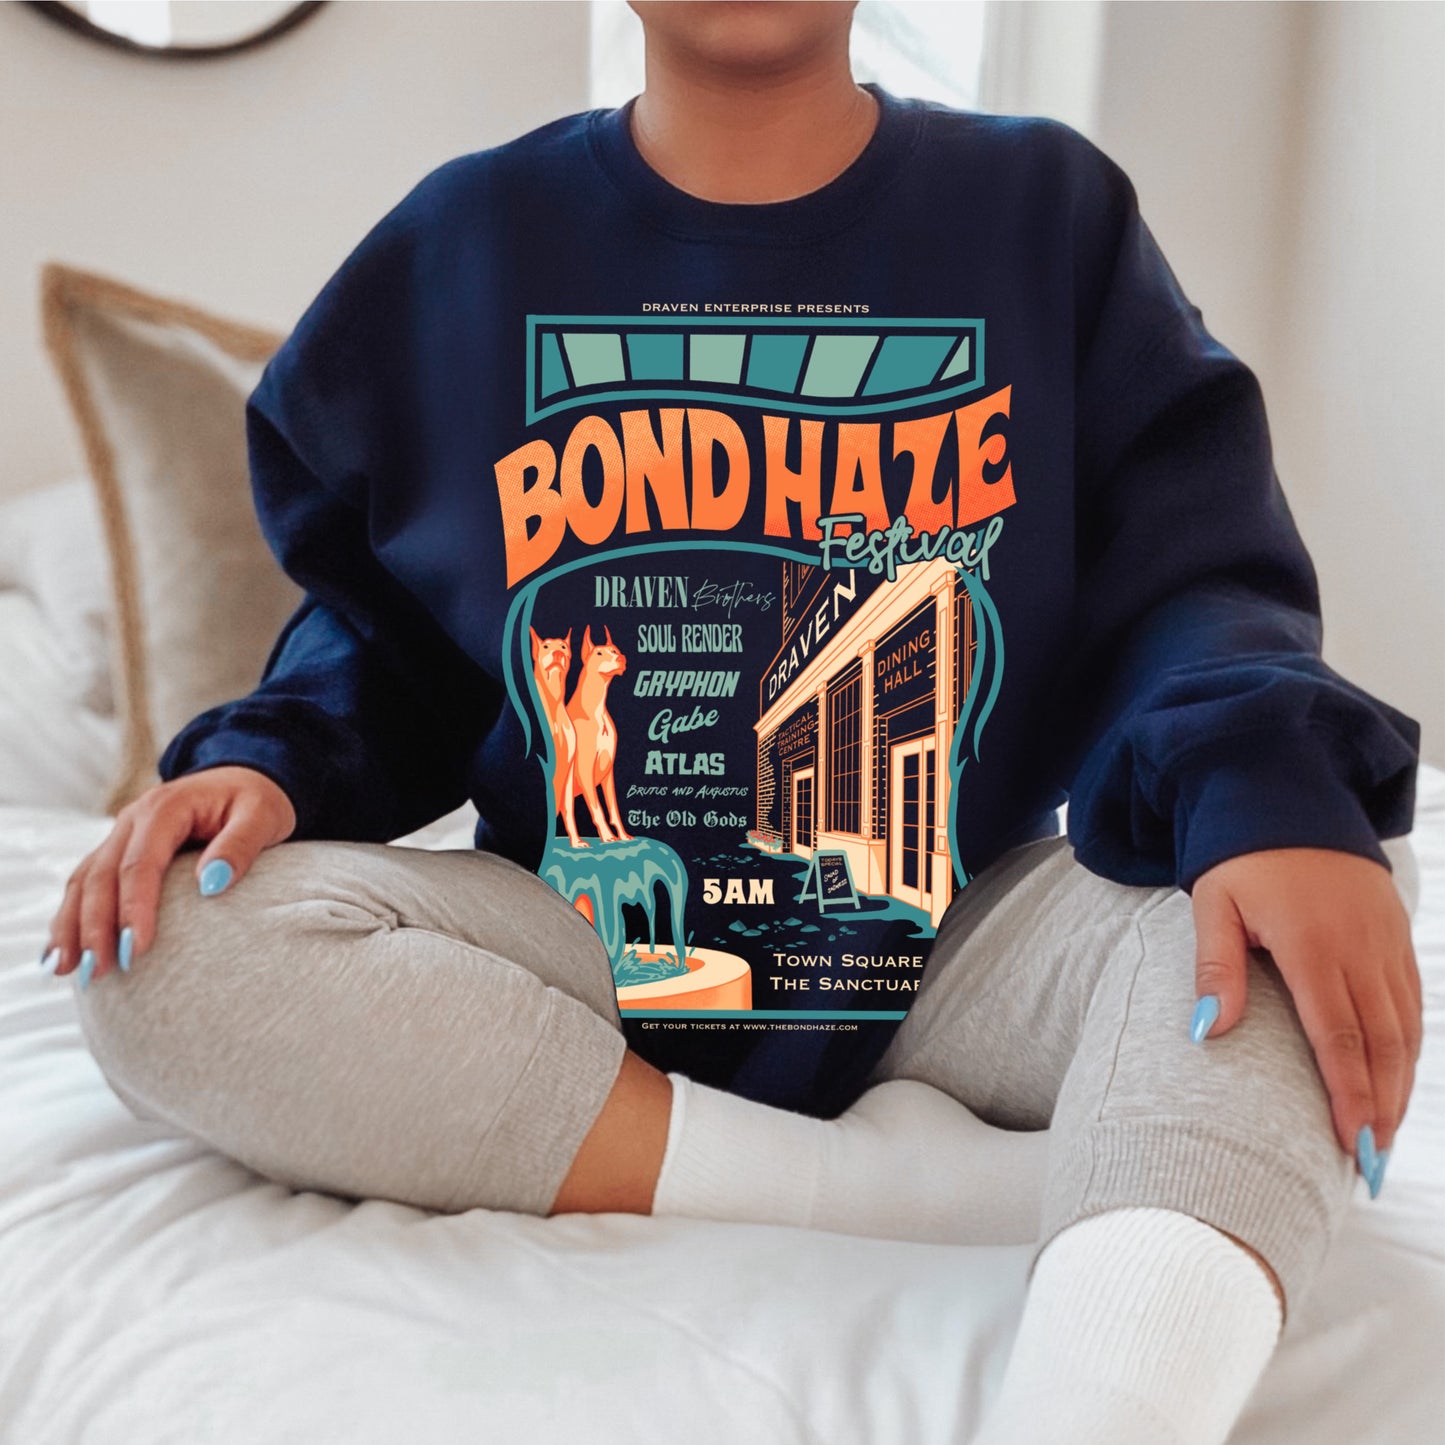 Bond Haze Festival Sweatshirt | The Bonds That Tie